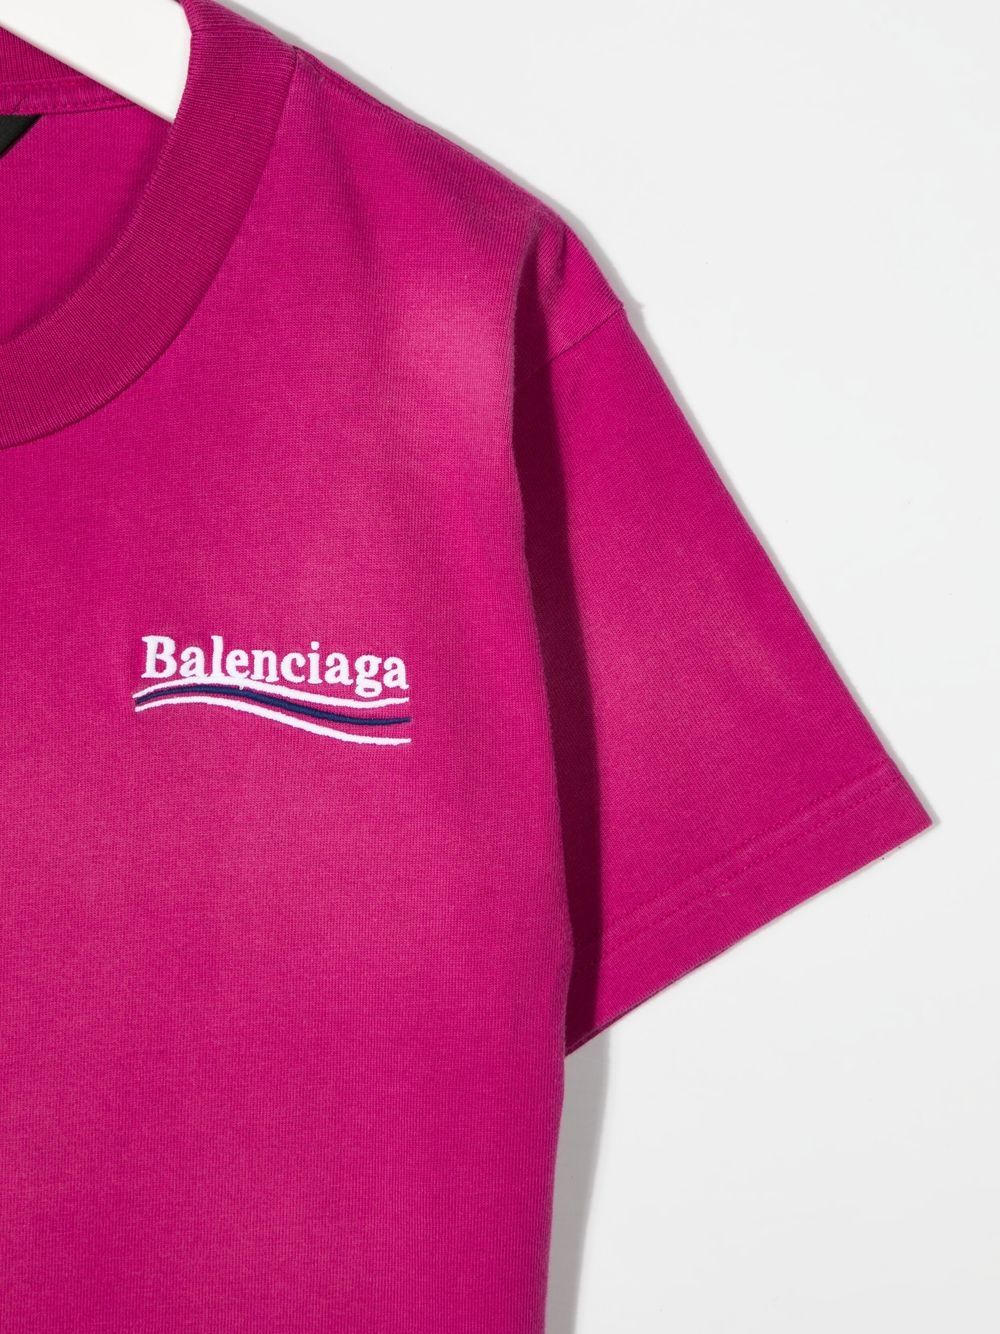 Balenciaga Political Campaign Tshirt in Vintage Jersey in Pink  ROOYAS